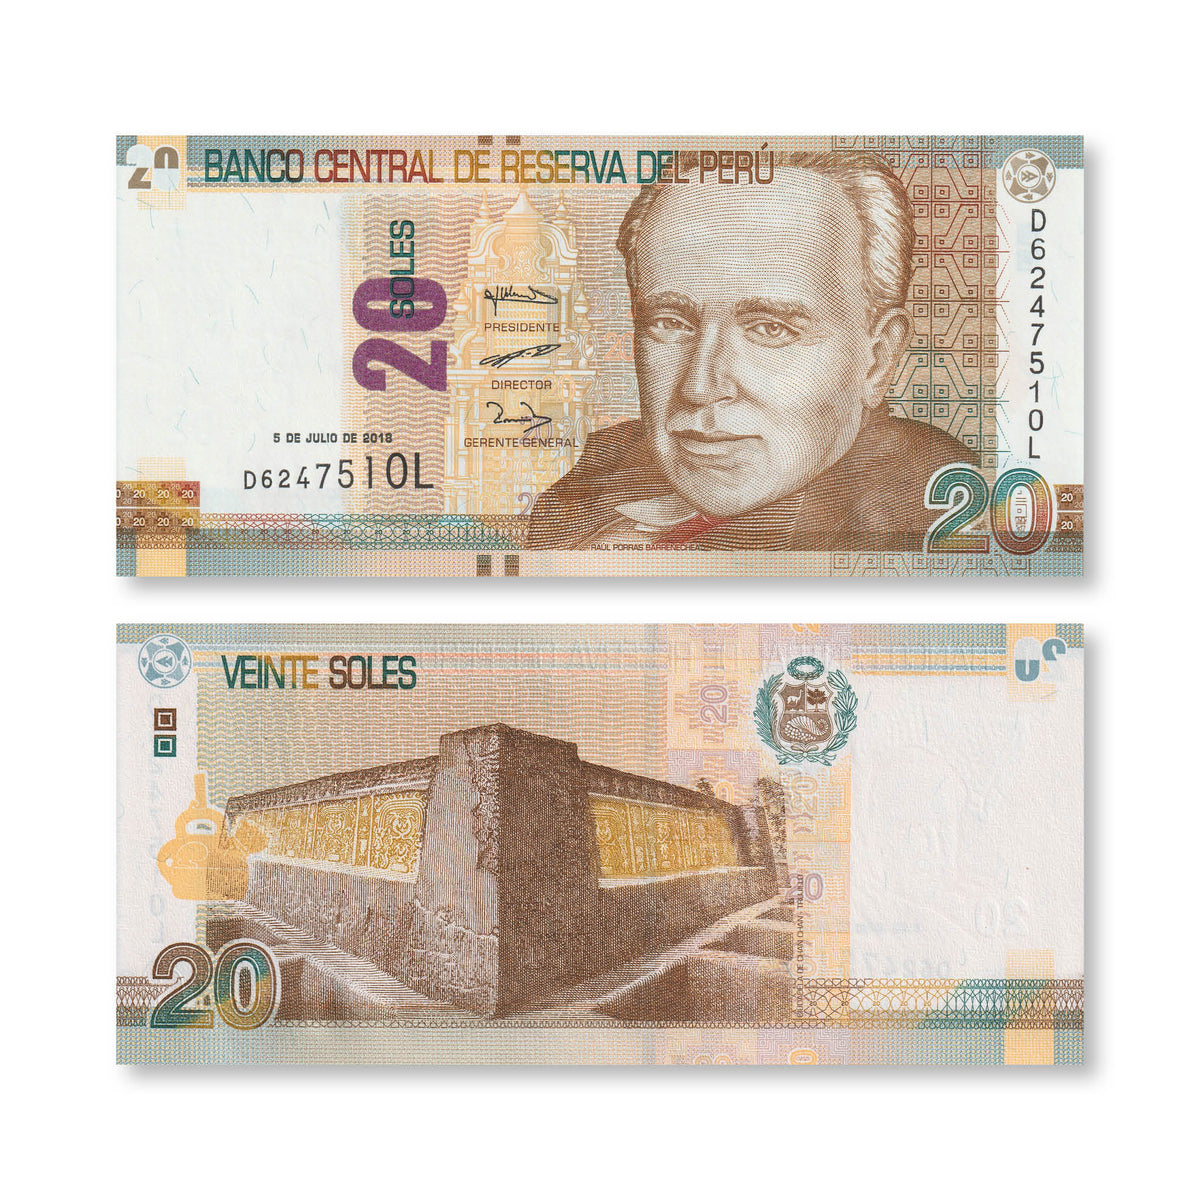 Peru 20 Soles, 2018, B533b, P193, UNC - Robert's World Money - World Banknotes